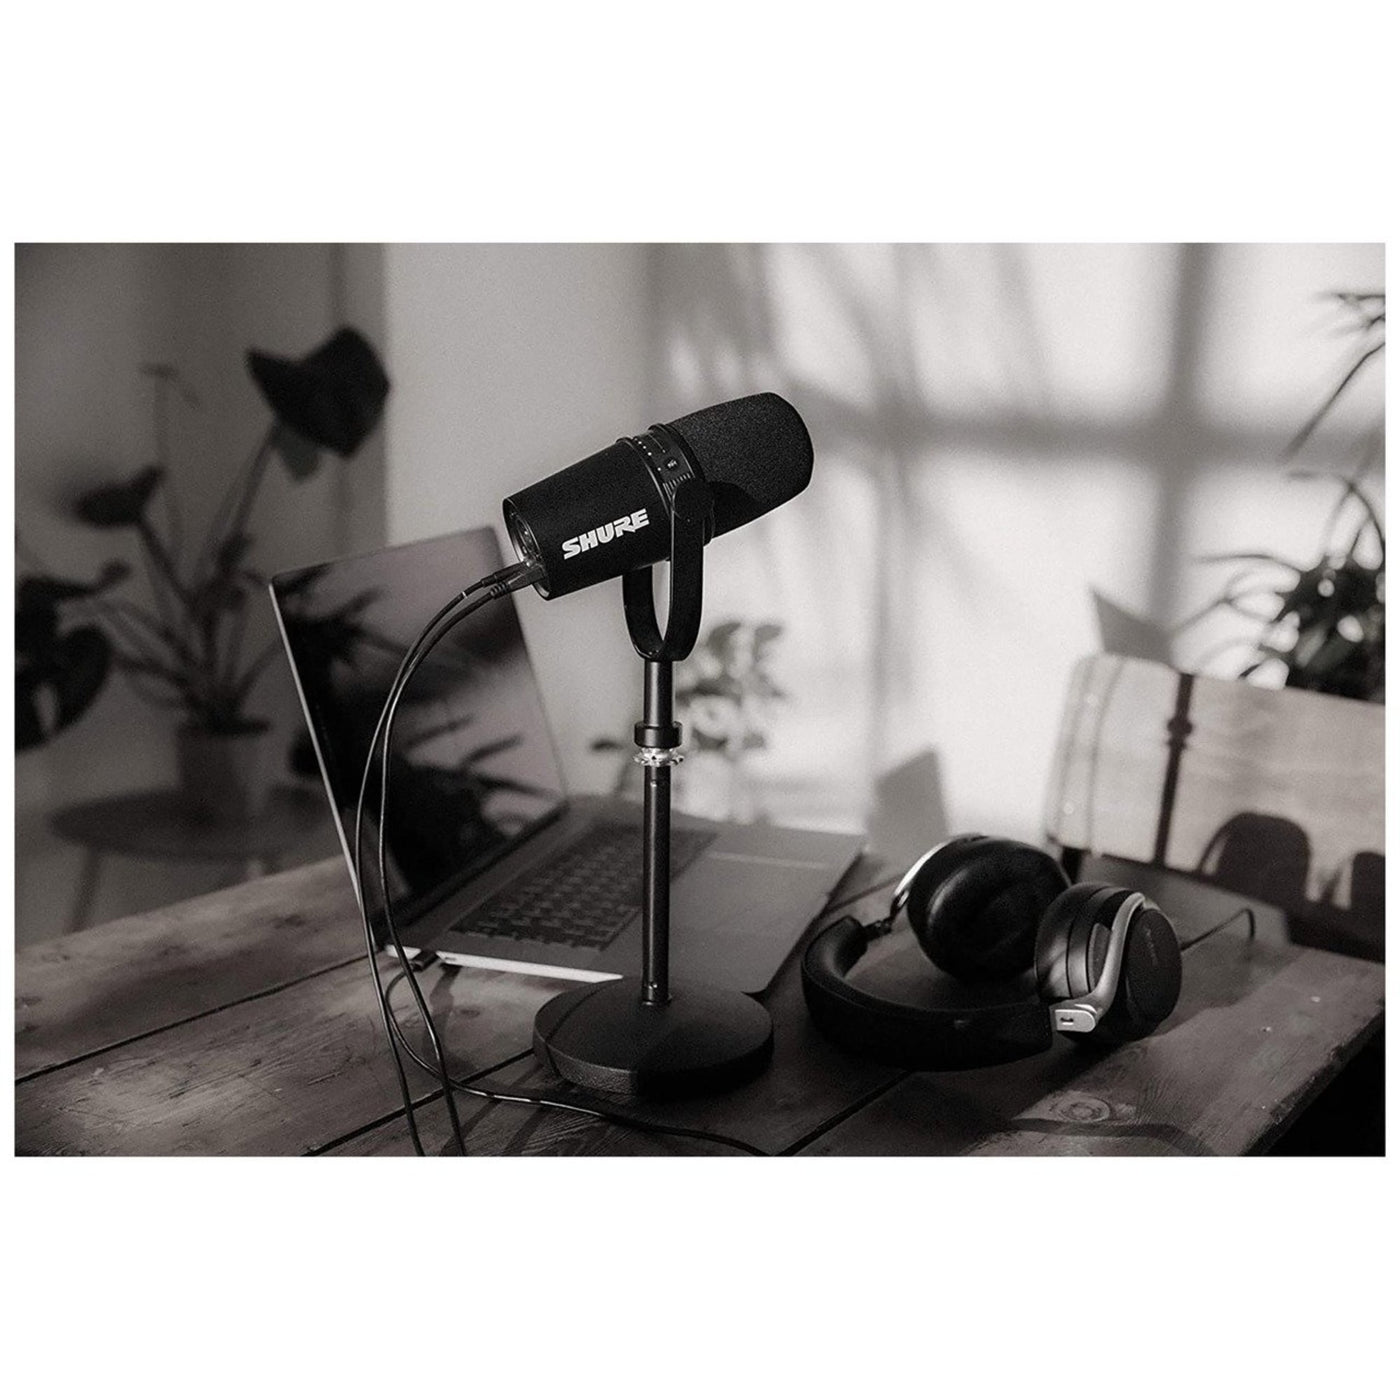 MV7 Podcast Microphone (Black)